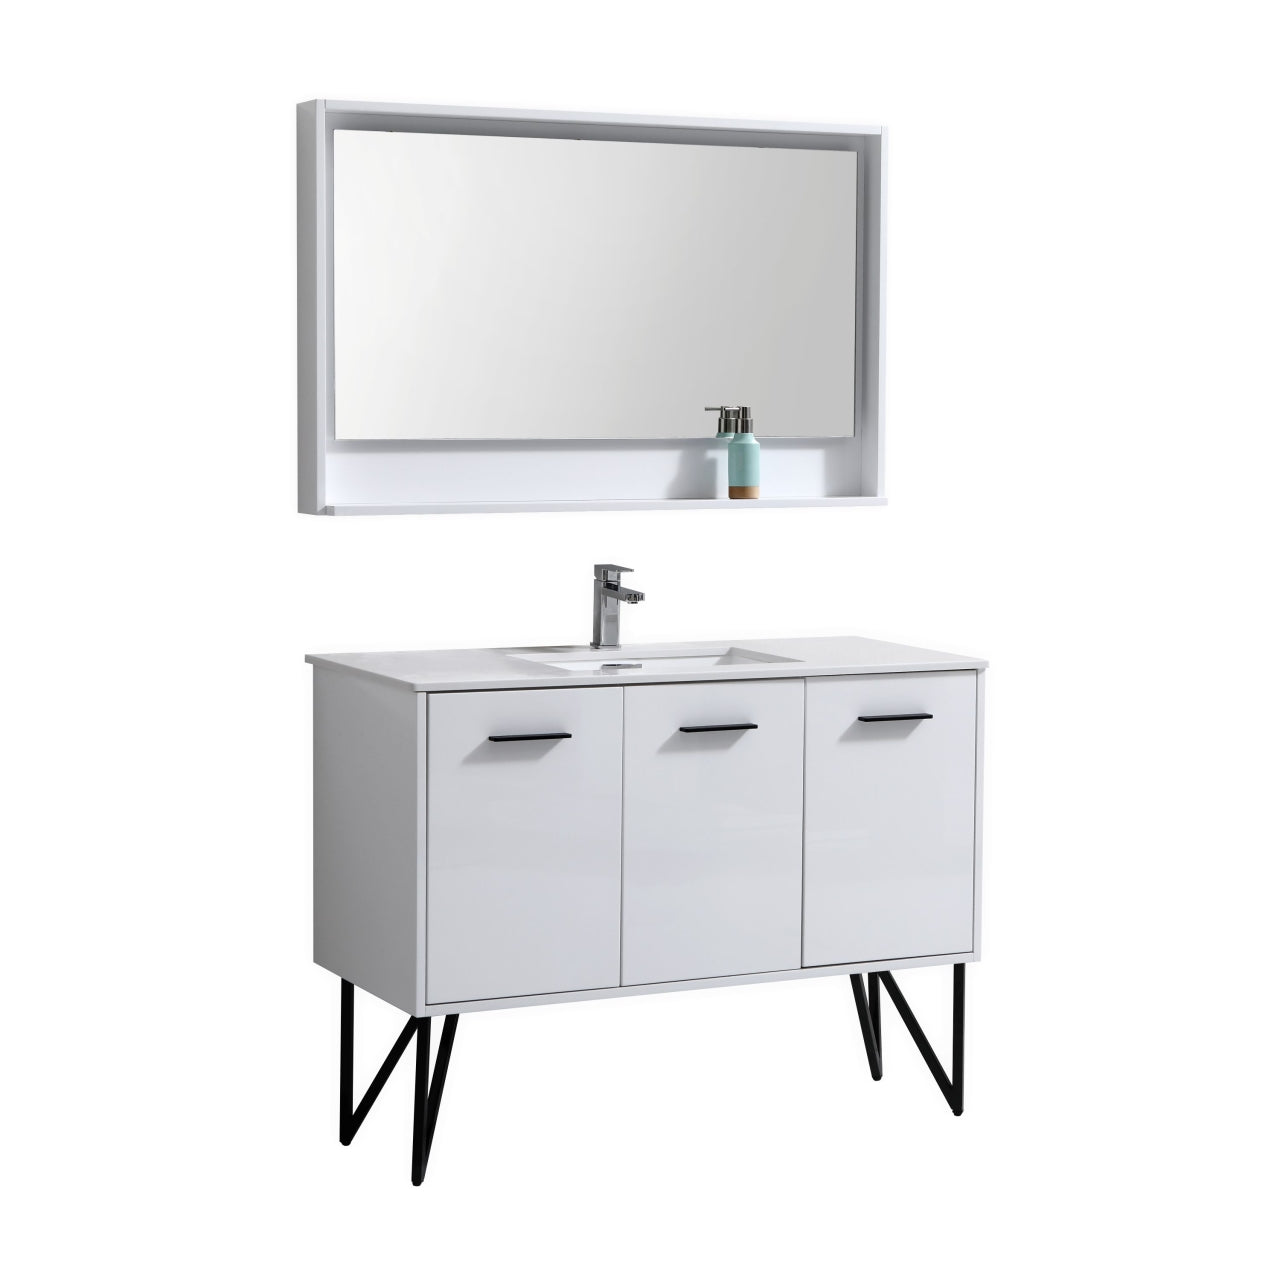 KUBEBATH Bosco KB48GW 48" Single Bathroom Vanity in High Gloss White with Cream Quartz, Rectangle Sink, Angled View